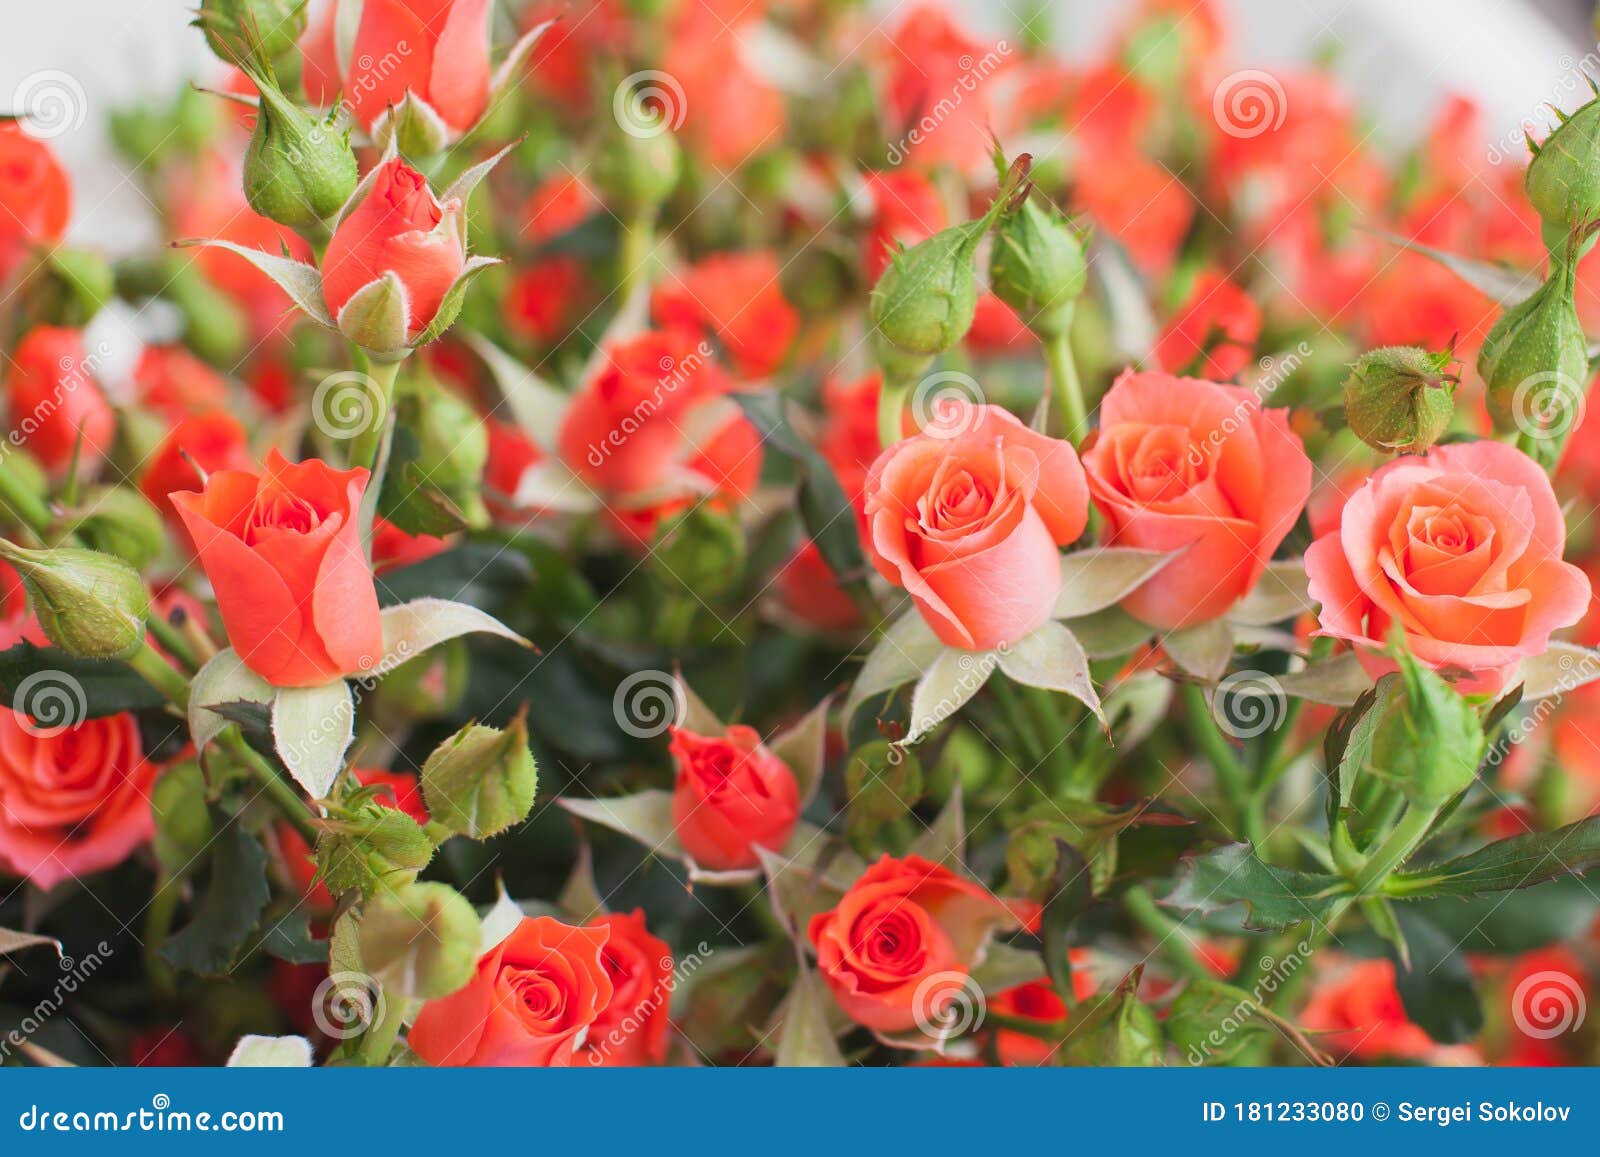 roses ruiortro alegria bush background